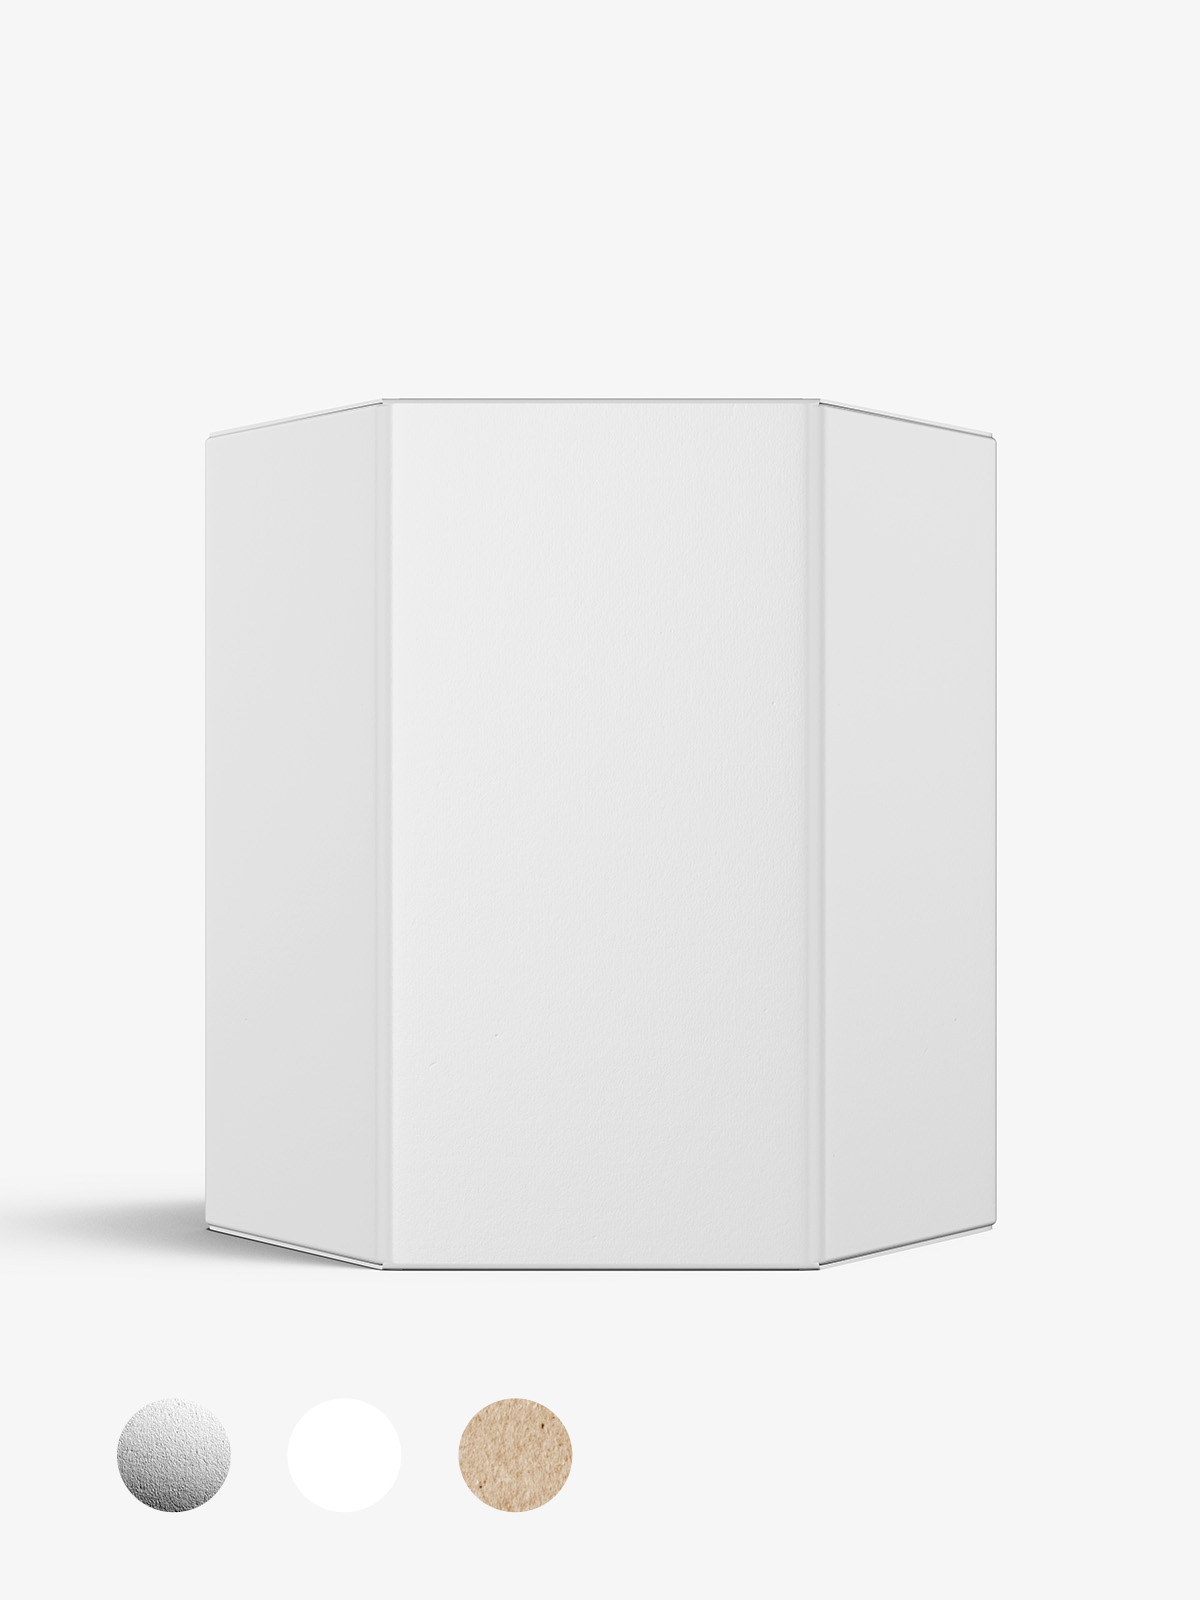 Download Hexagonal box mockup / white - metallic - kraft - Smarty Mockups